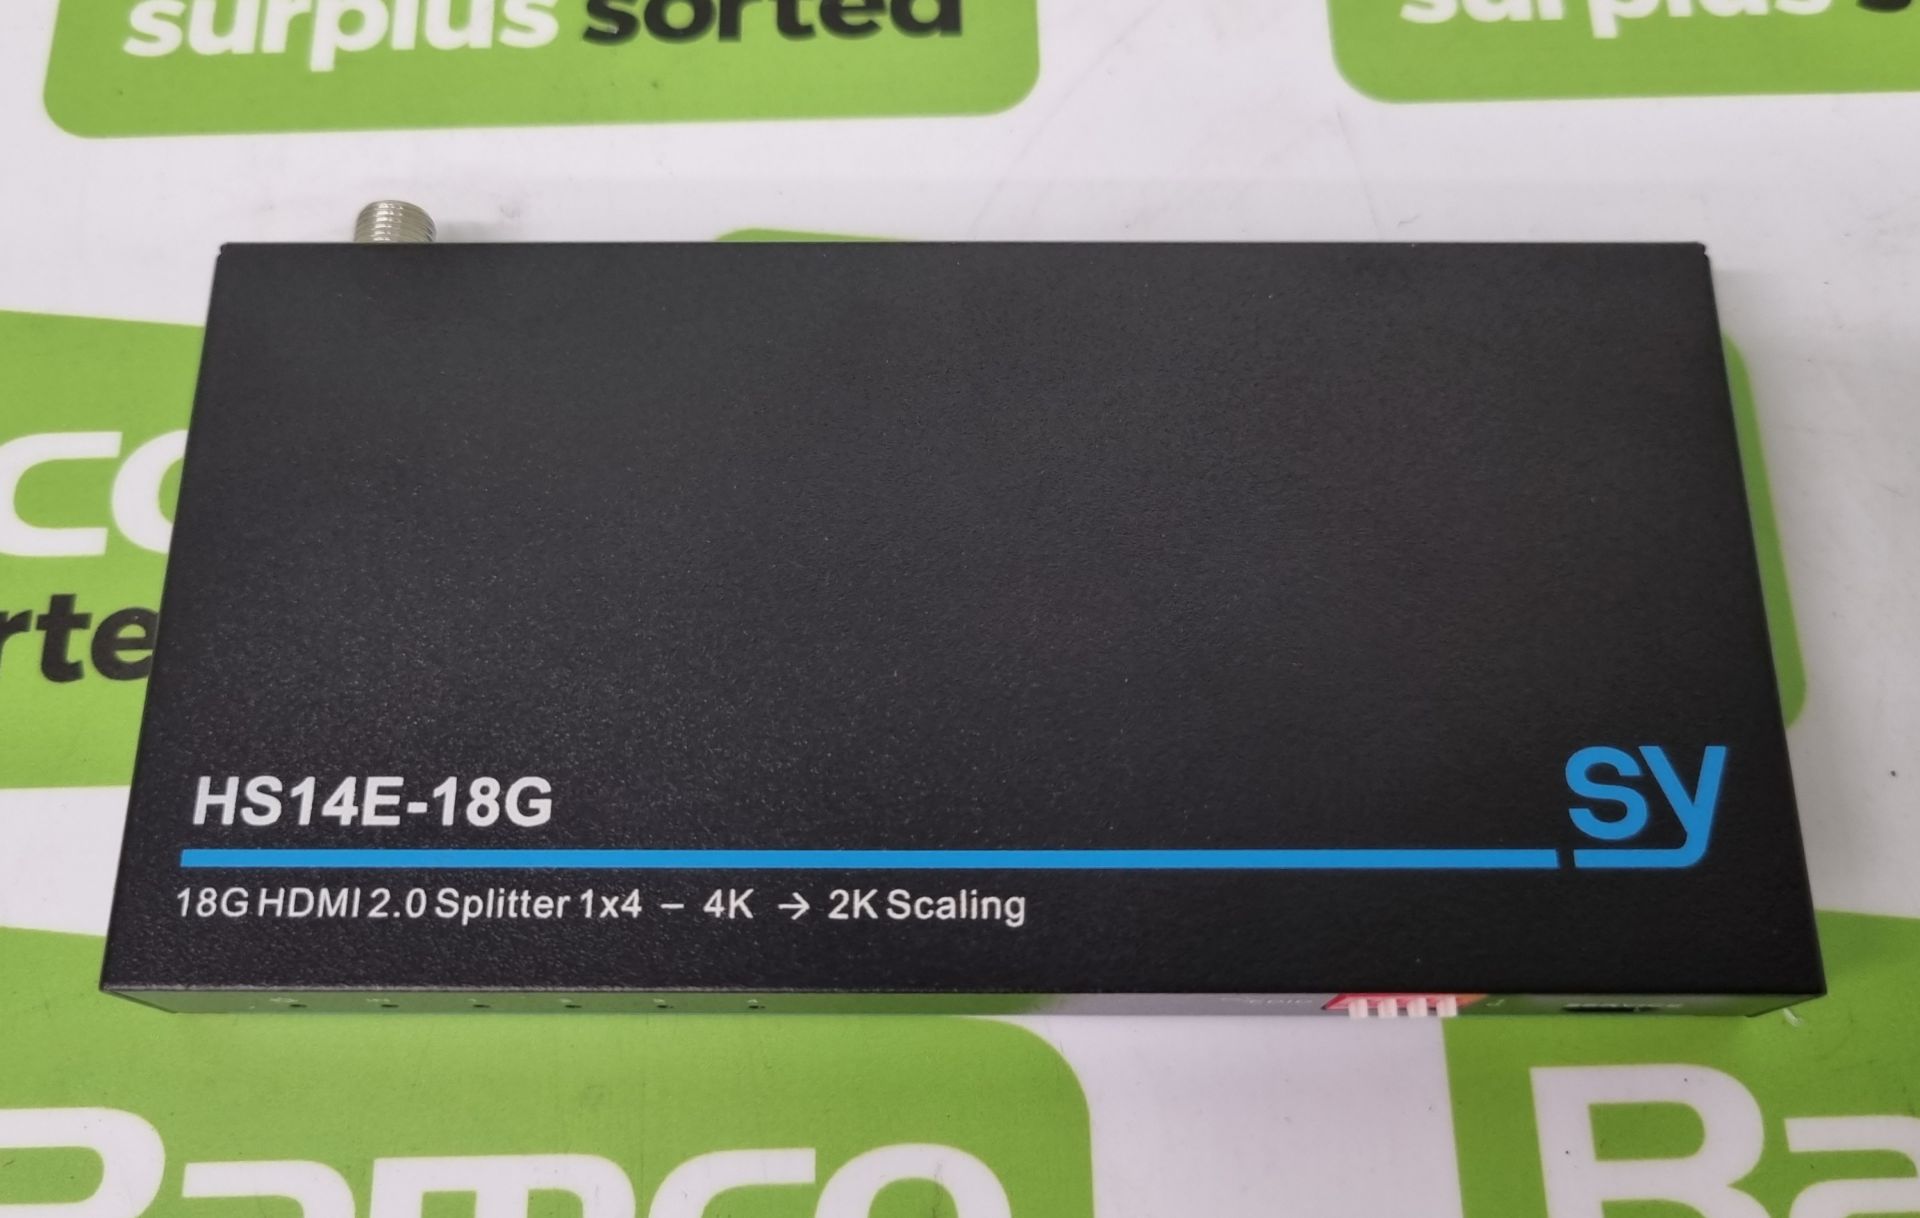 SY-HS14E-18G 1x4 HDMI 2.0 (18G) splitter - Image 4 of 8